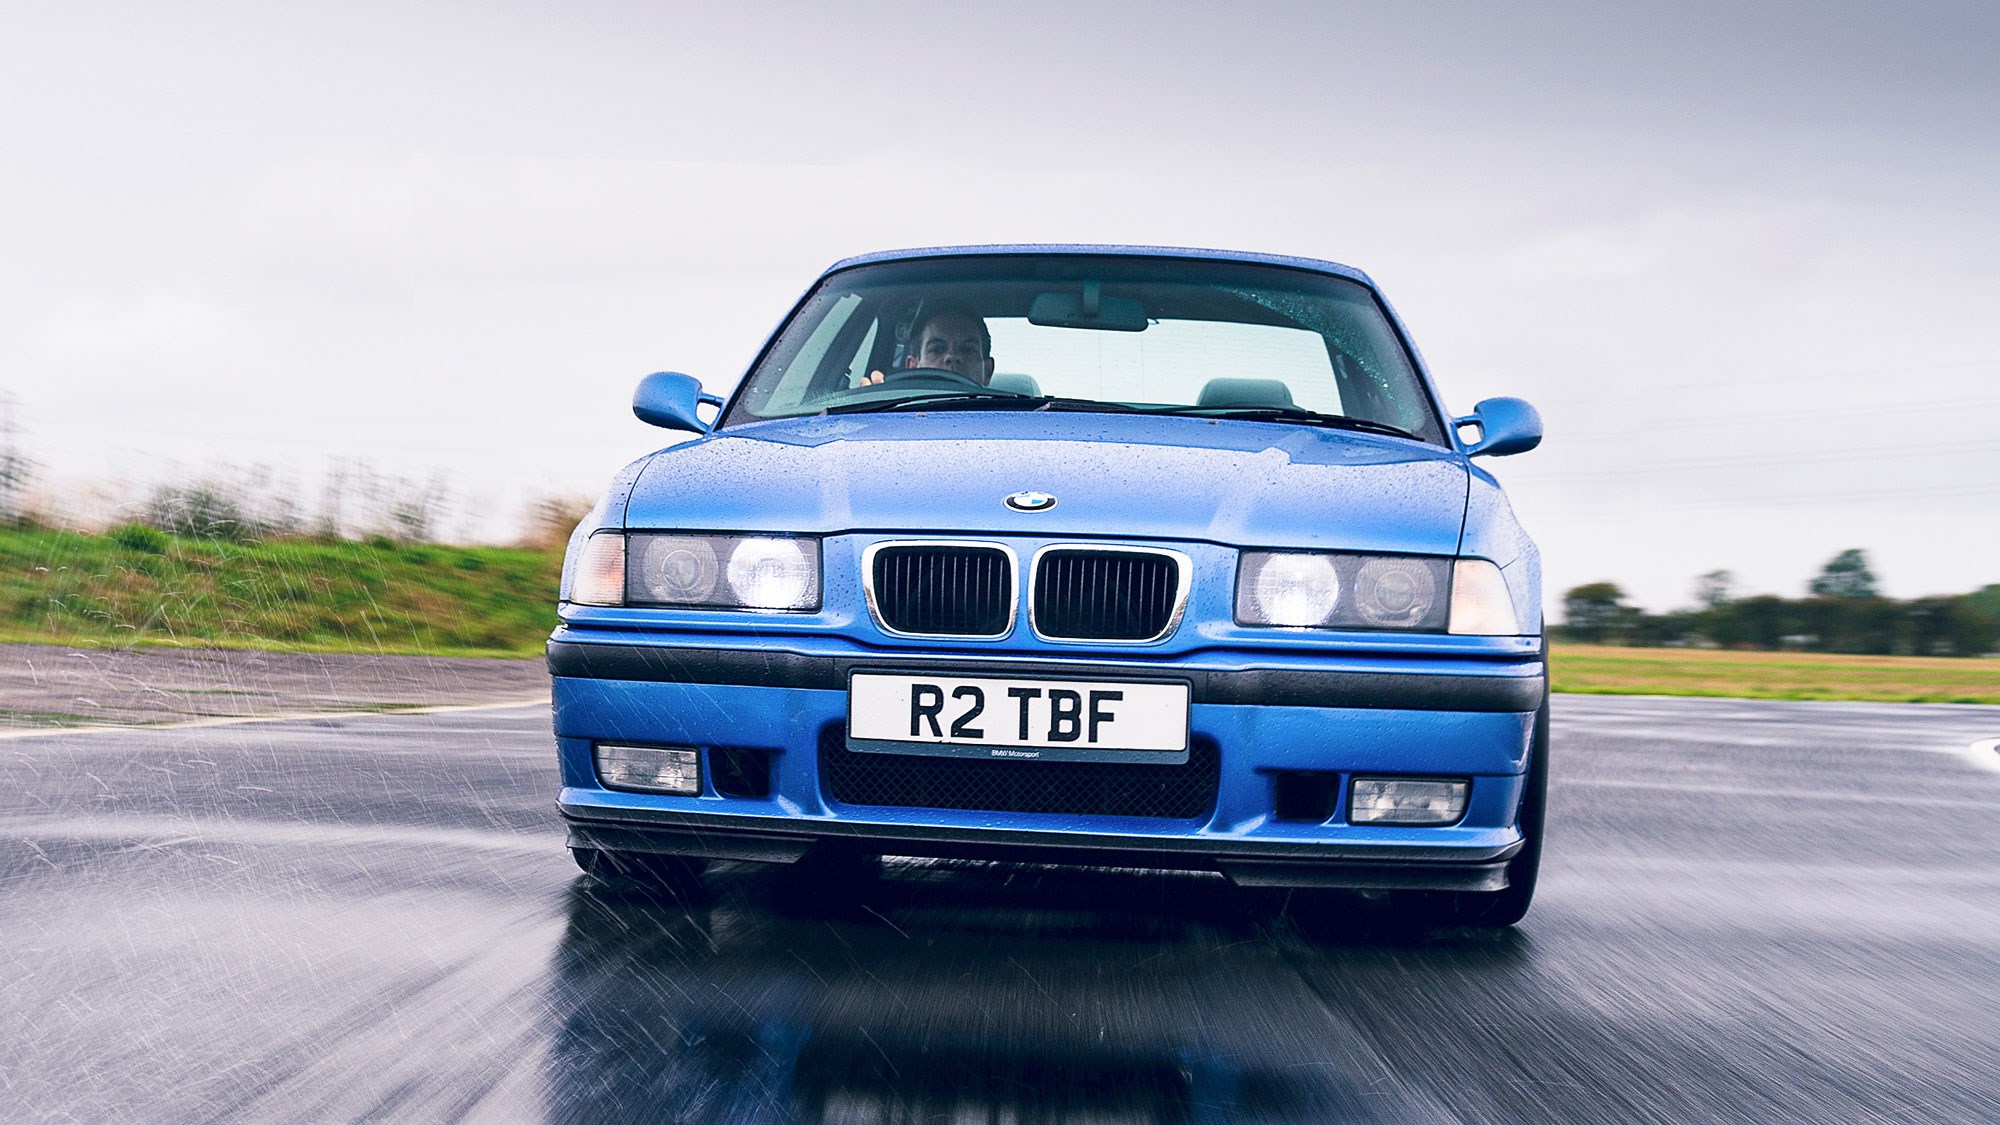 BMW E36 M3 review: the sensible buy | CAR Magazine